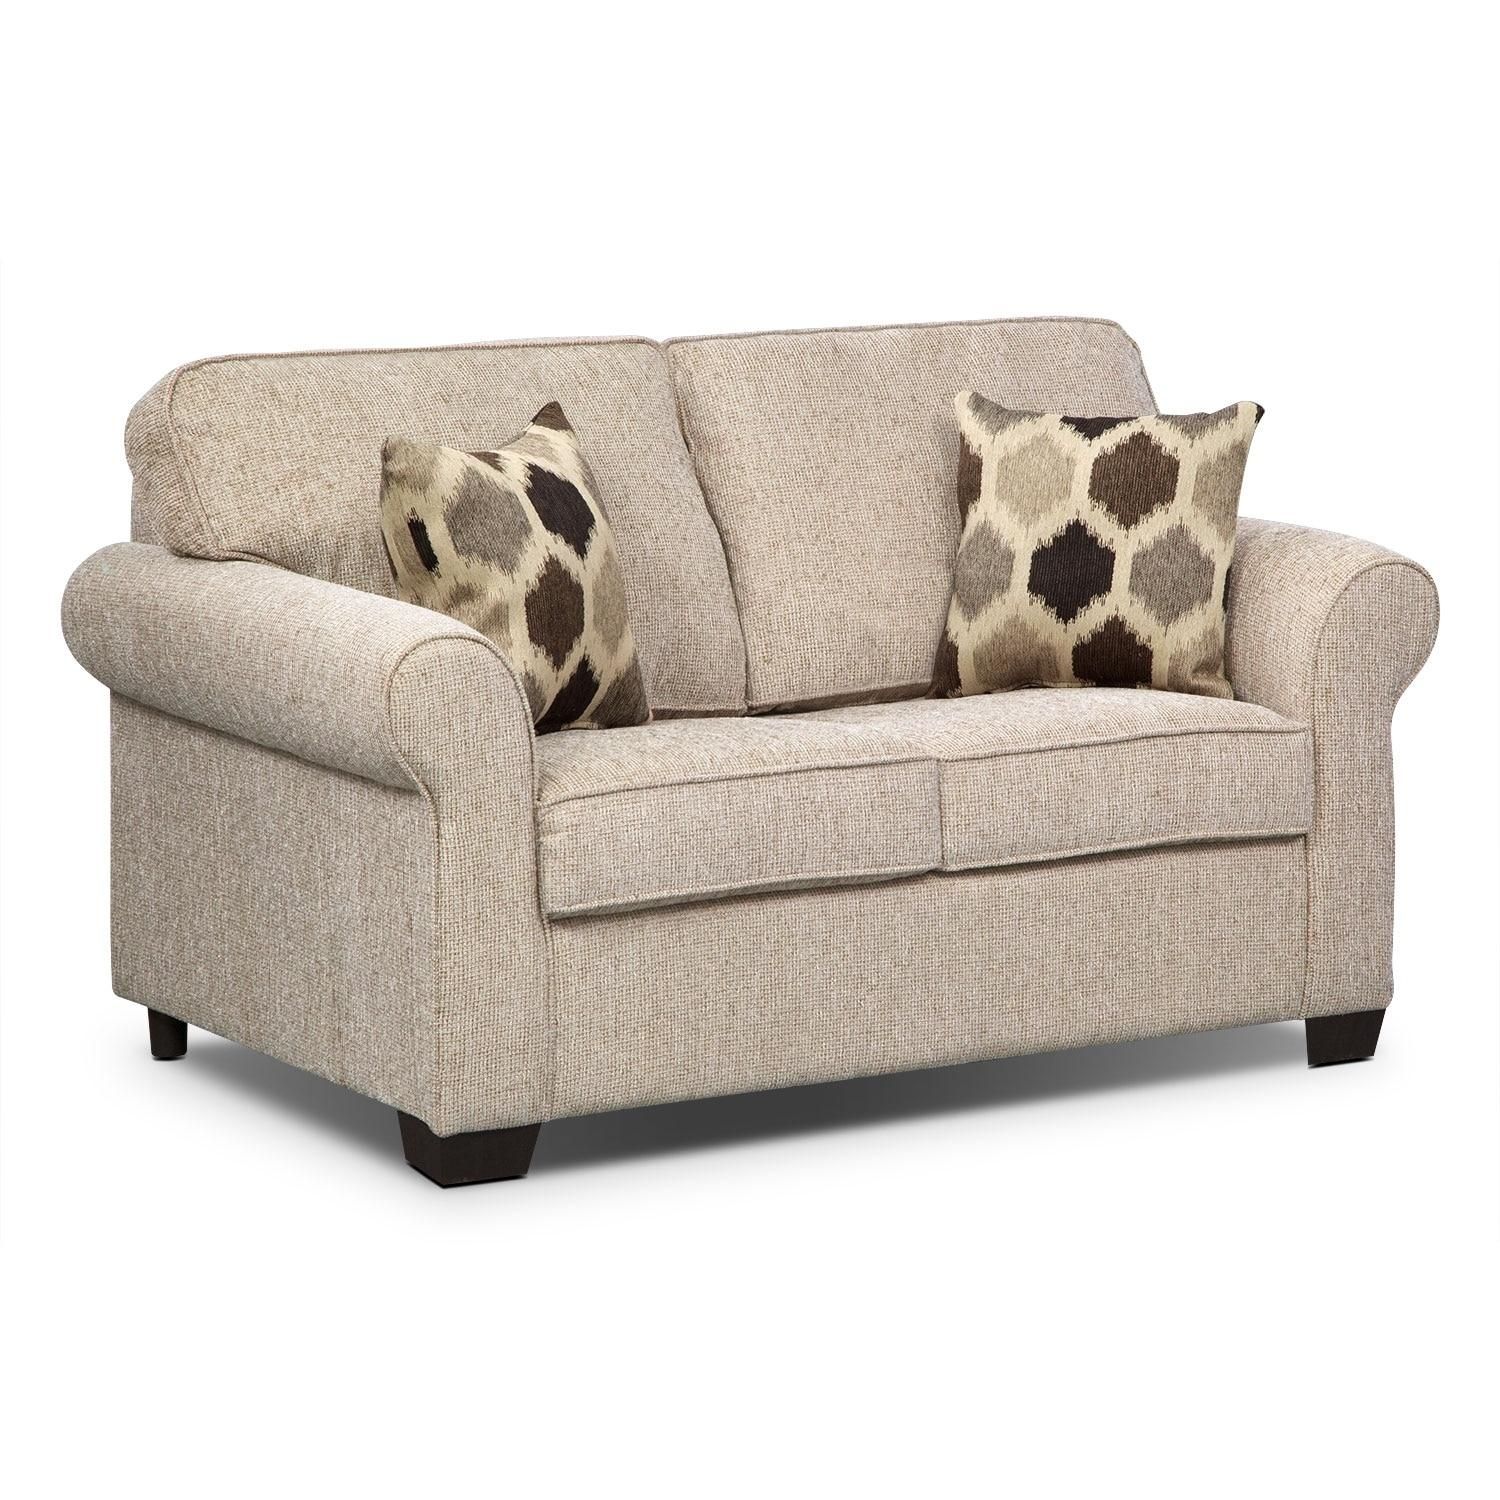 Fletcher Twin Memory Foam Sleeper Sofa – Beige | Value City Furniture Pertaining To Loveseat Twin Sleeper Sofas (View 7 of 20)